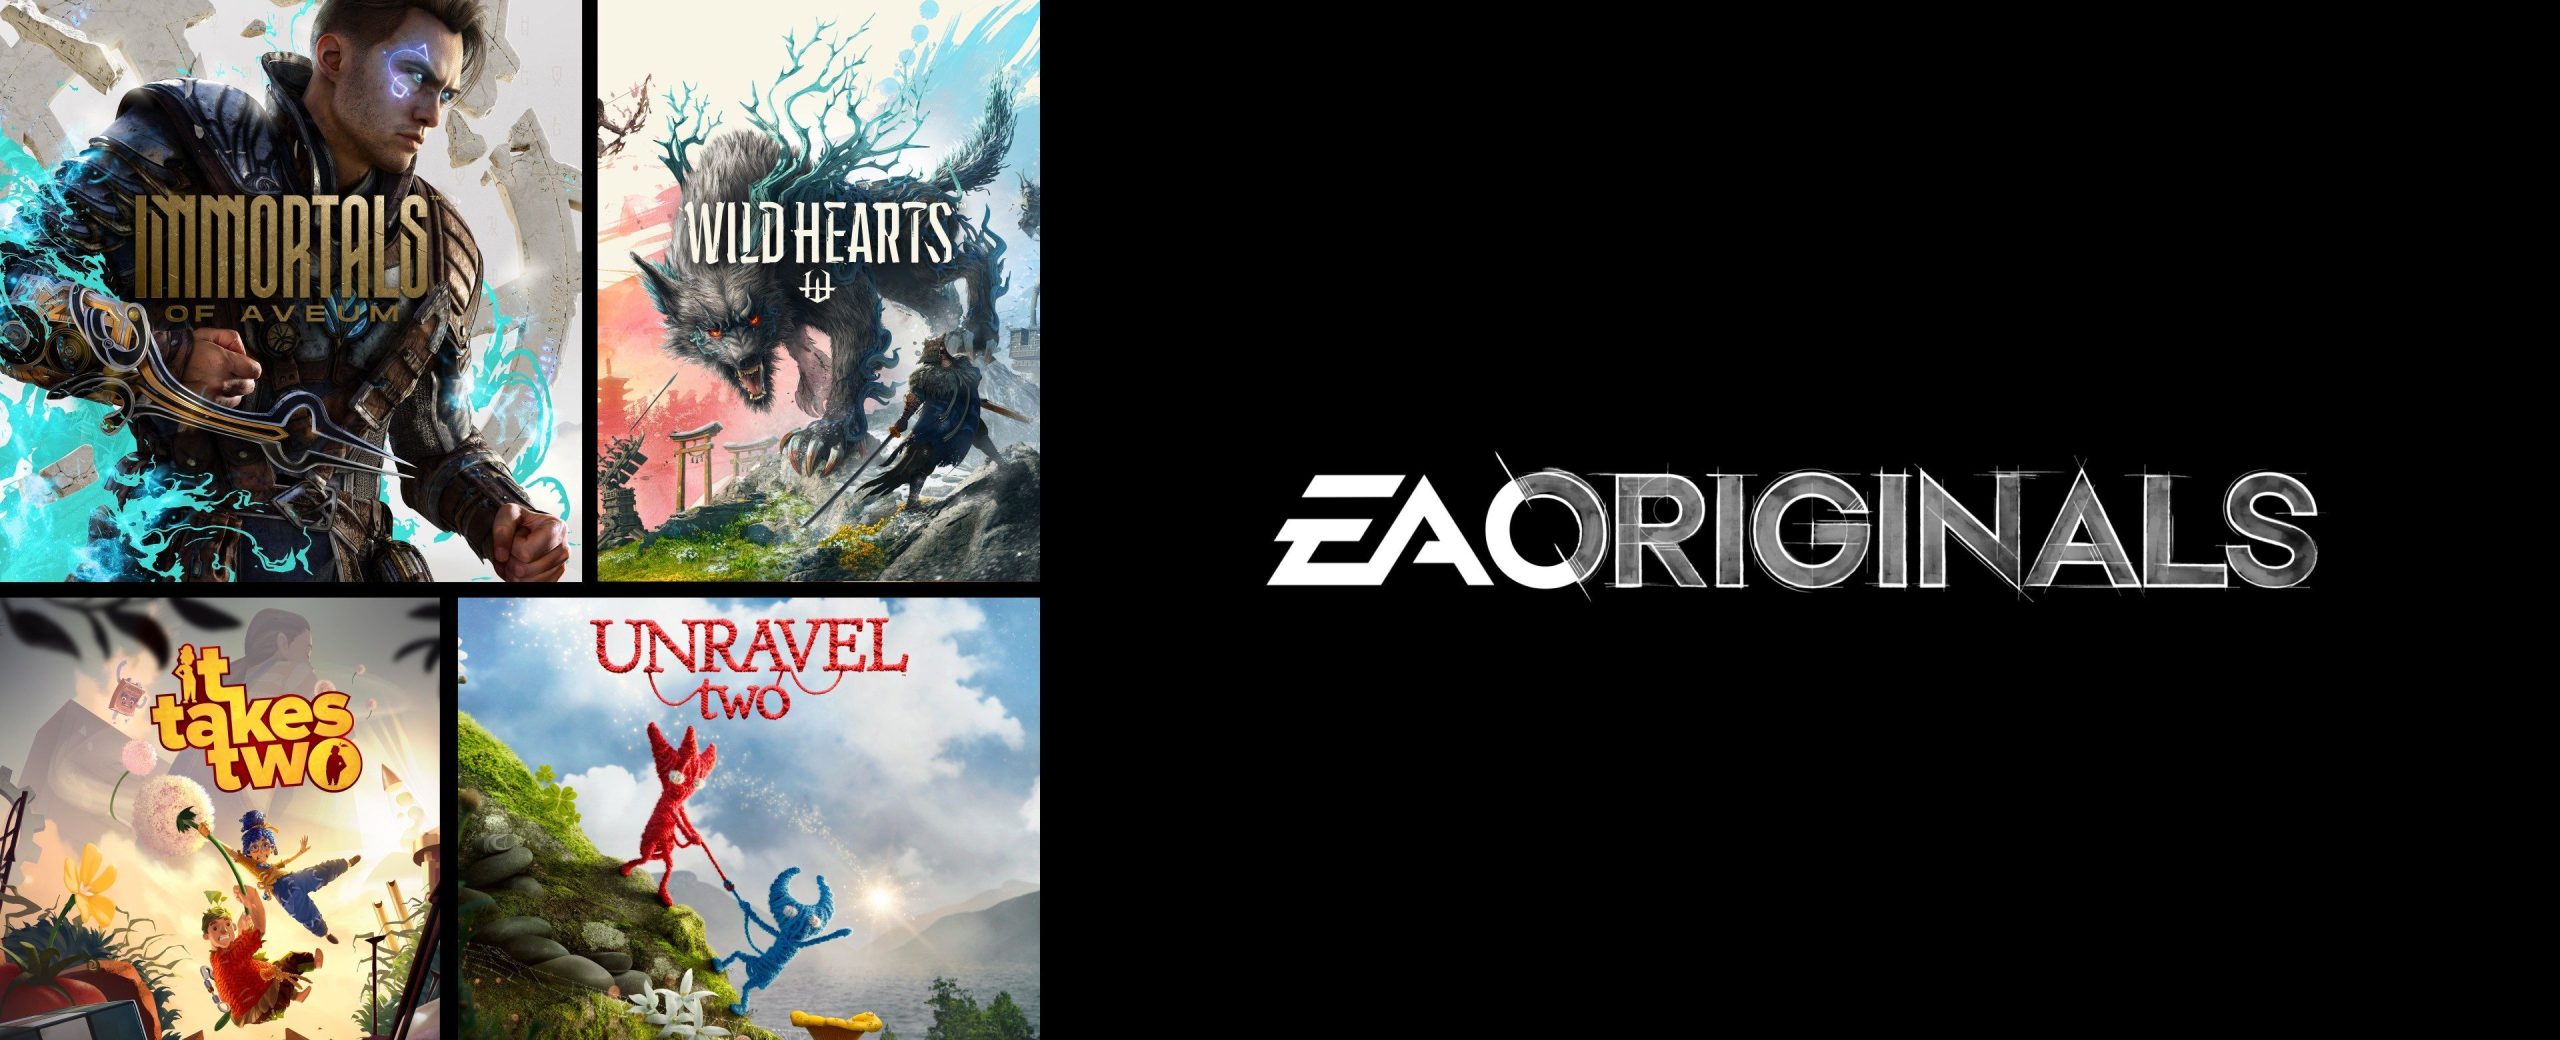 Imagem mostra banner do EA Originals, programa de jogos indie e AAA produzidos pela EA